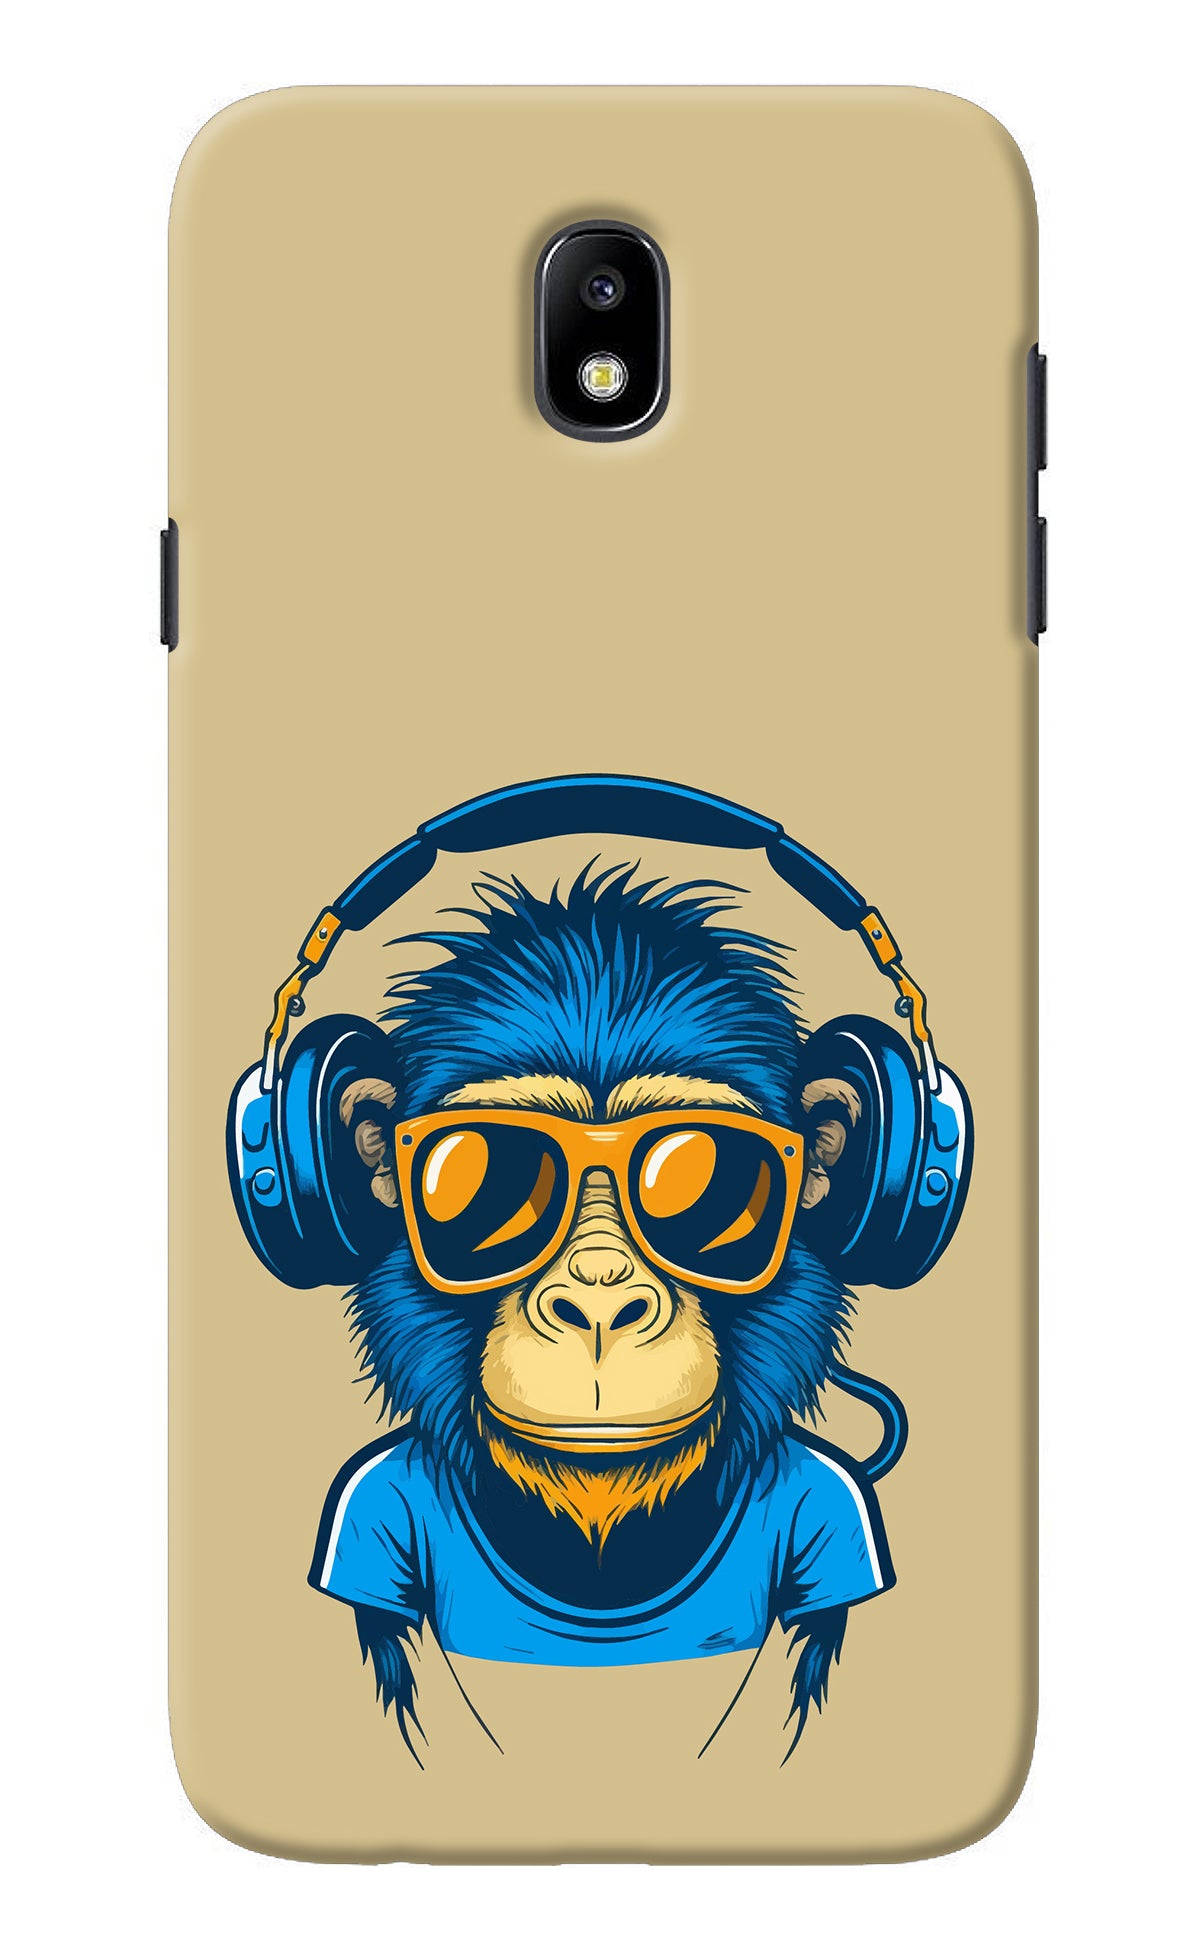 Monkey Headphone Samsung J7 Pro Back Cover